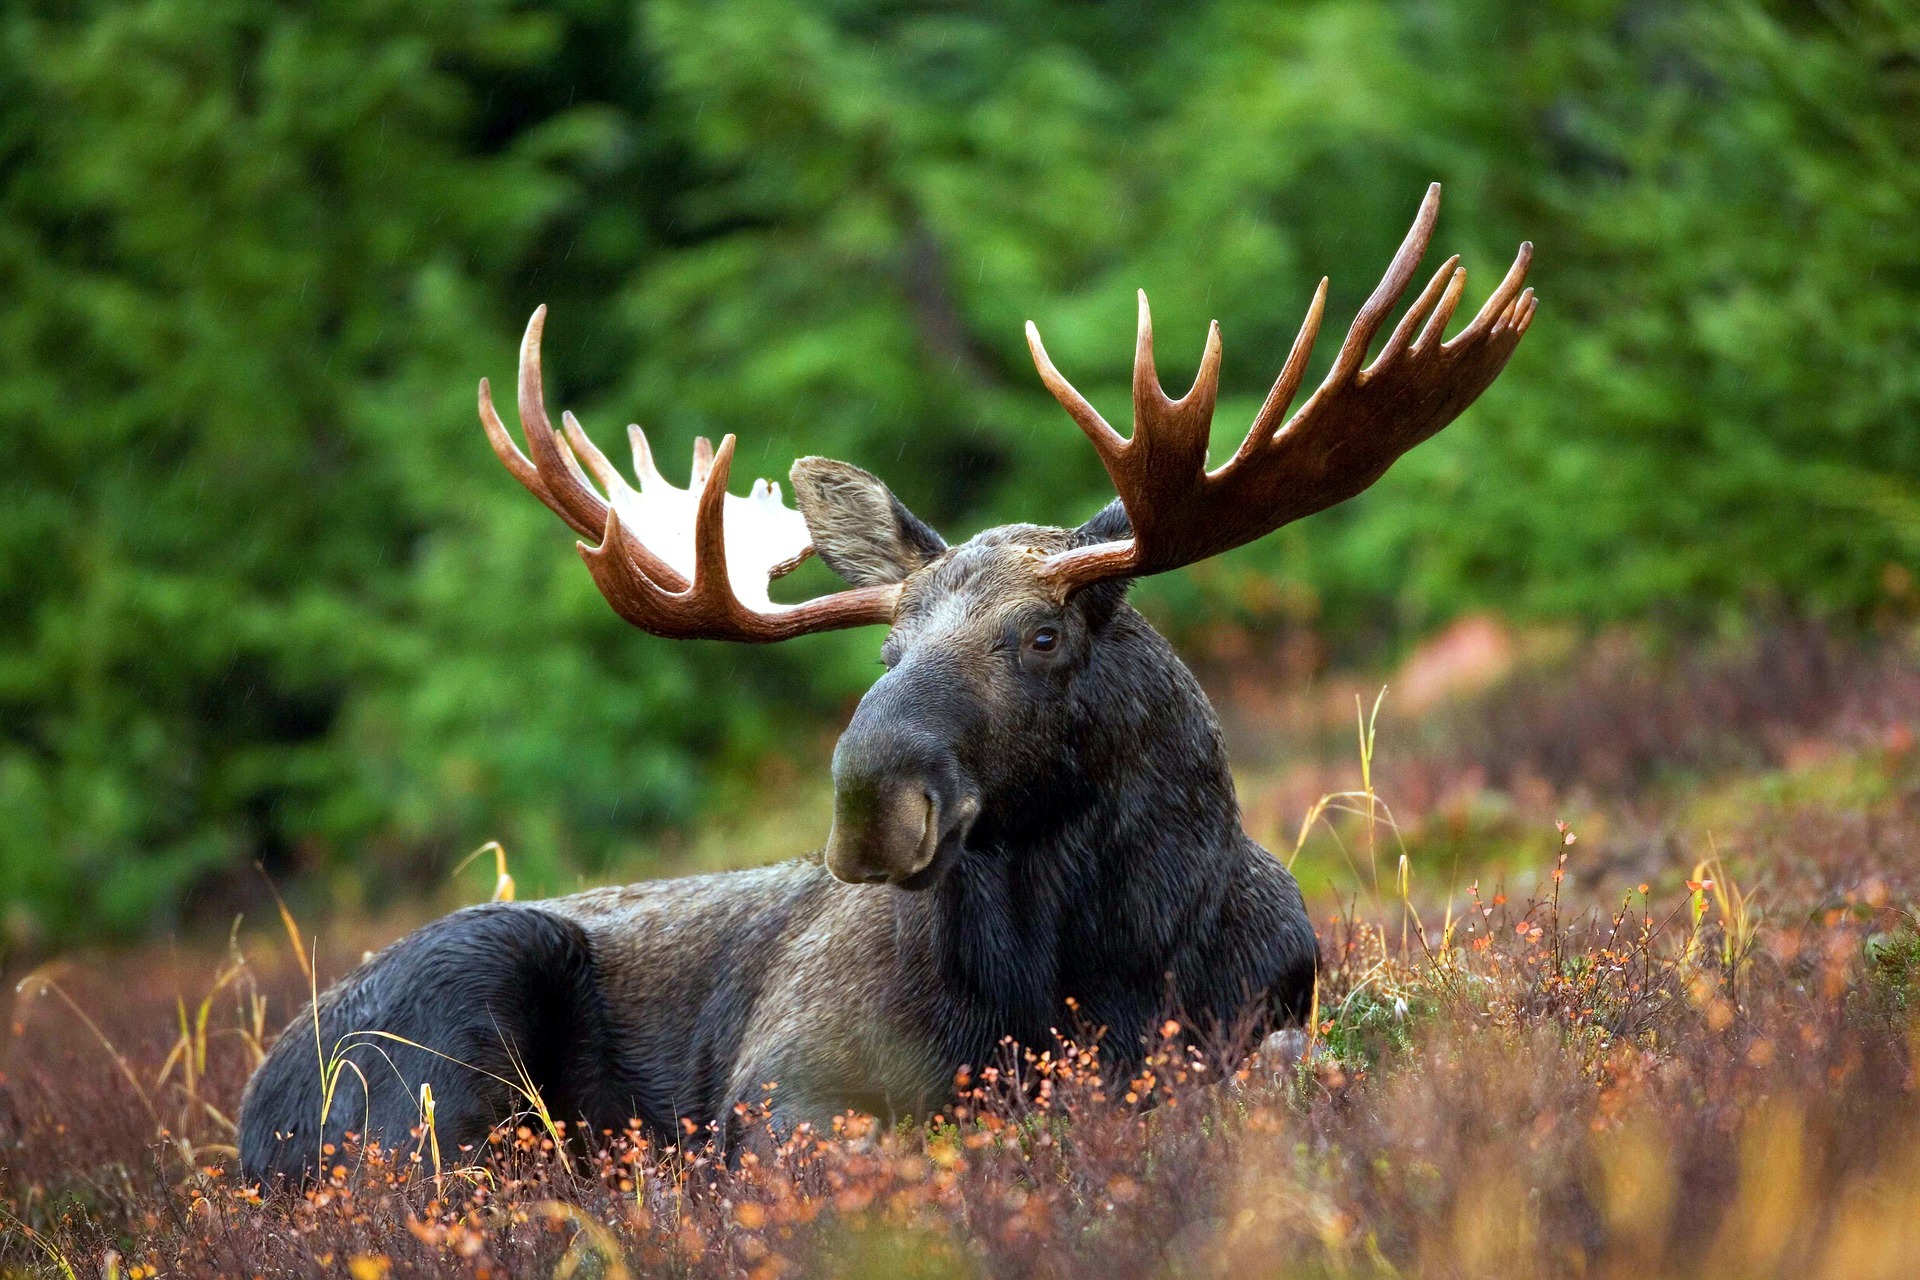 Moose lying in grass